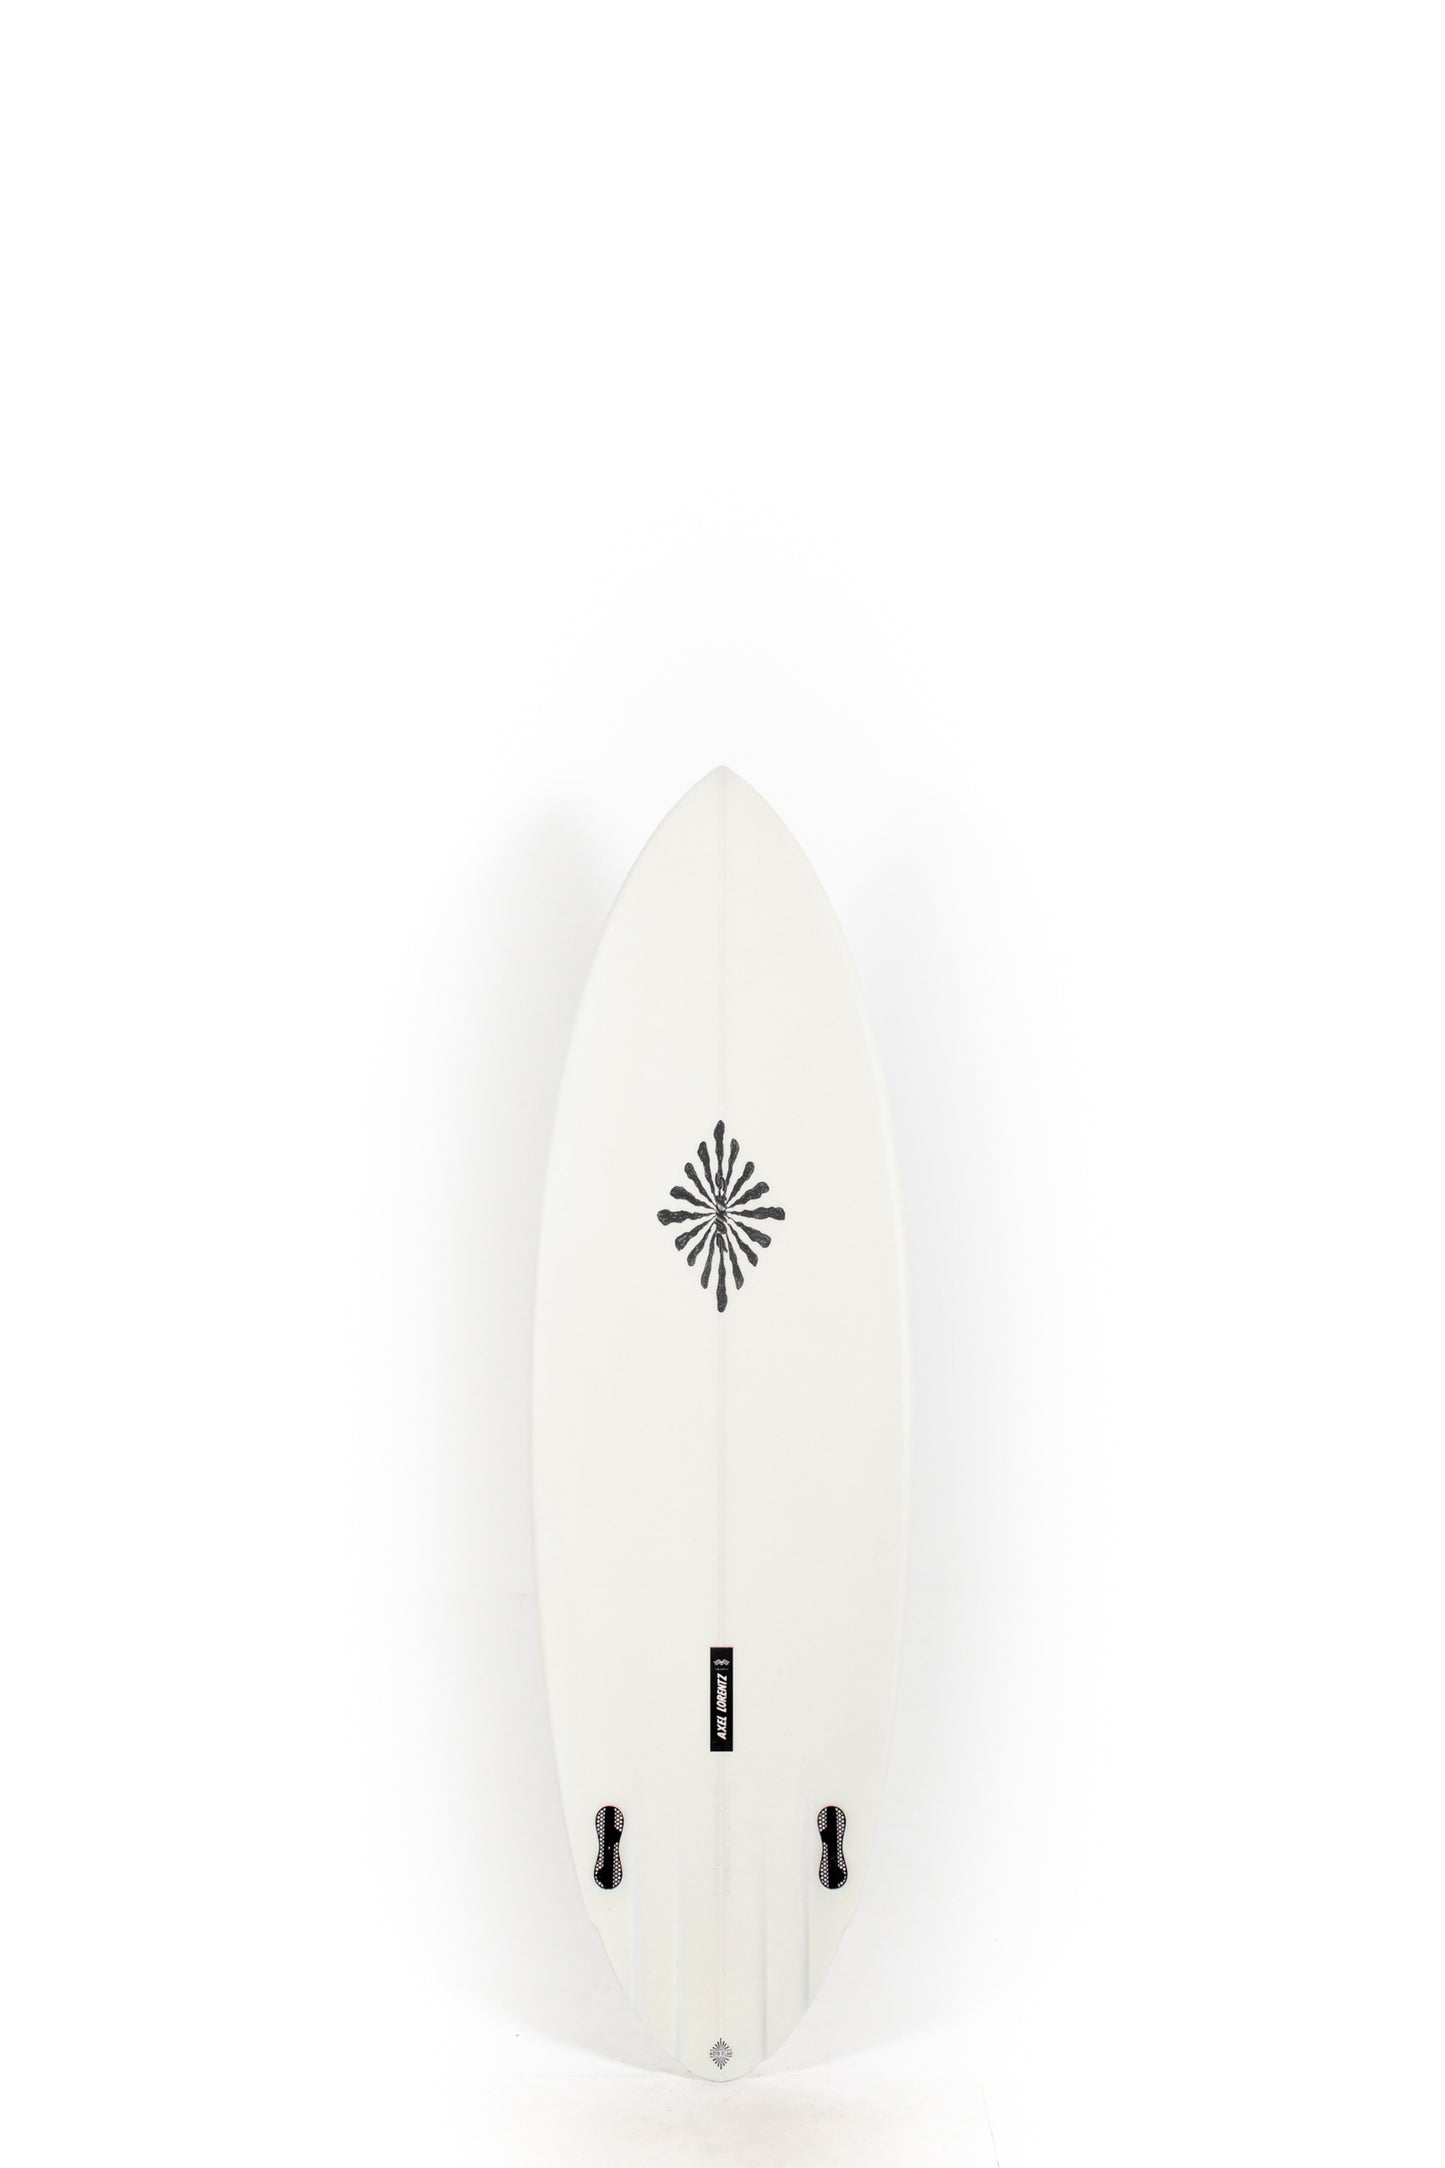 Pukas Surf Shop - Pukas Surfboards - ACID PLAN by Axel Lorentz -  5'8" x 19,75 x 2,40 x 29,42L - AX08421